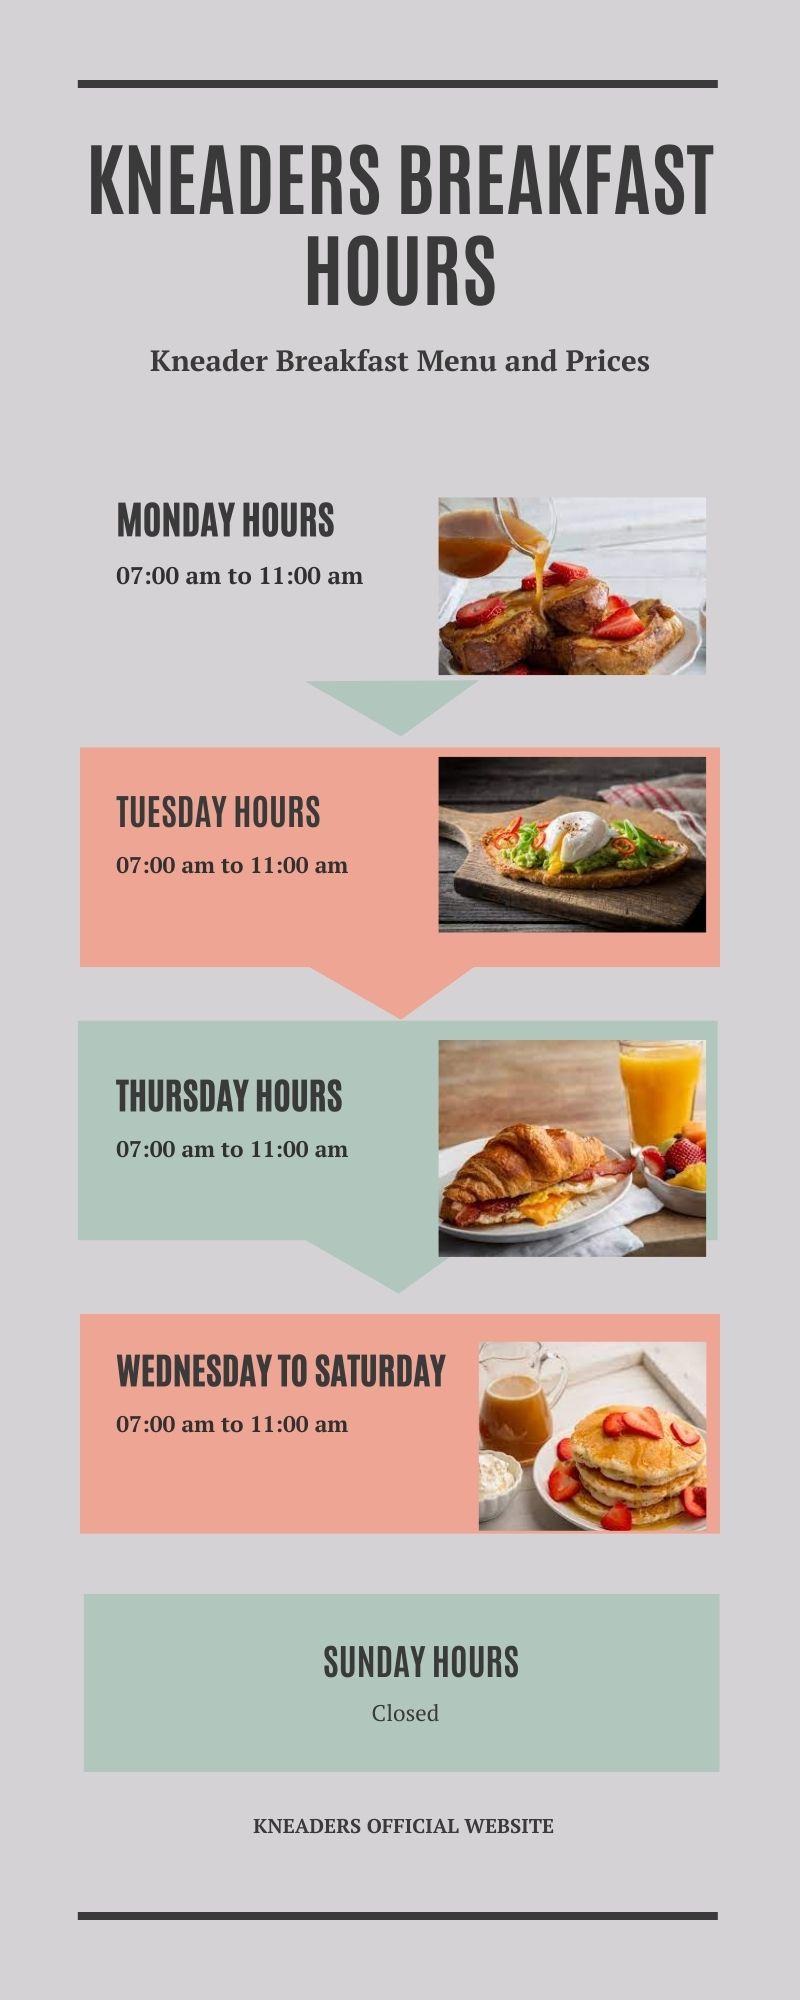 Kneaders Breakfast Hours Infographic